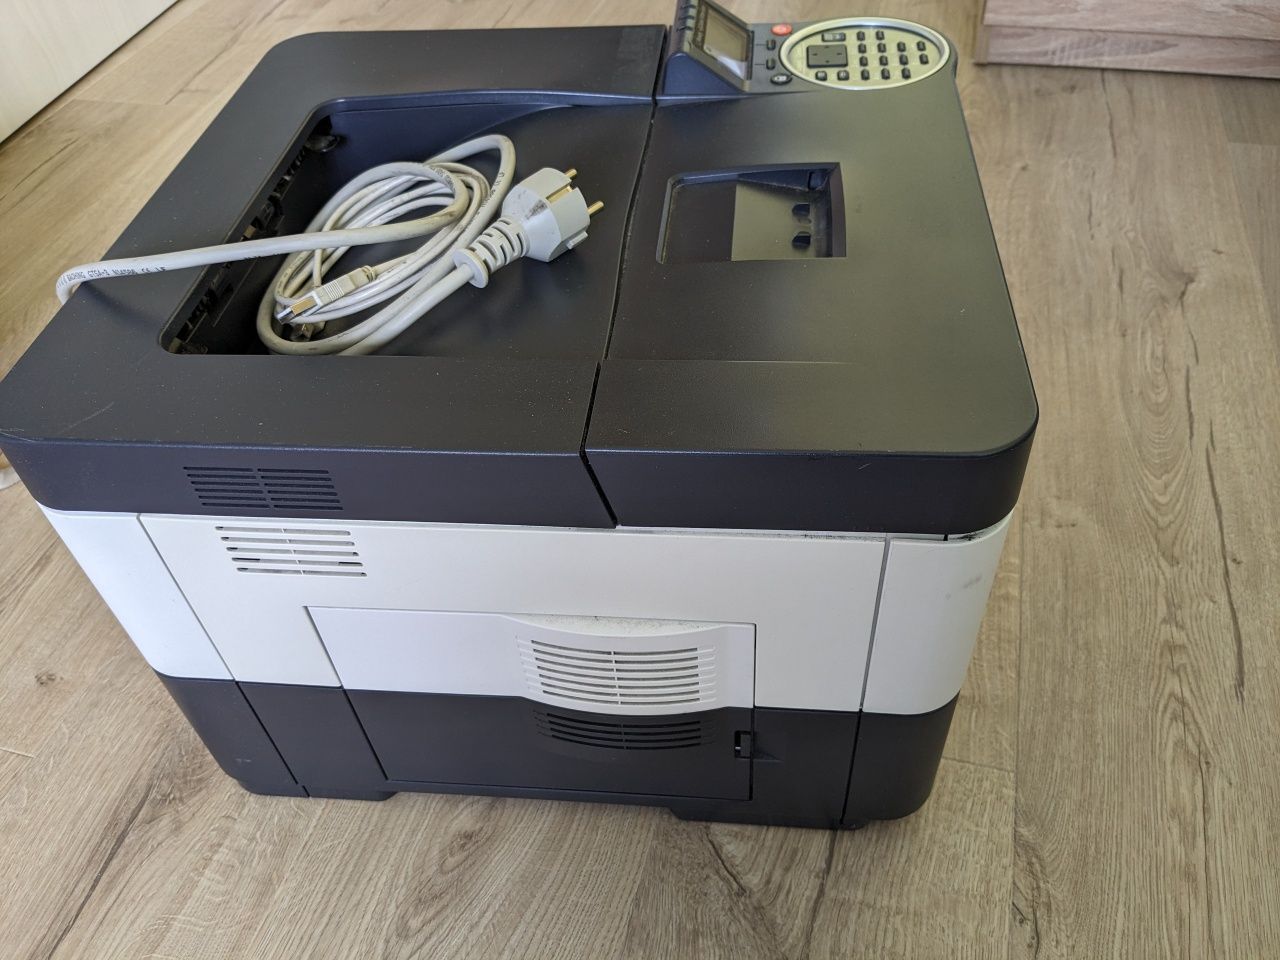 Принтер Kyocera Ecosys FS2100DN